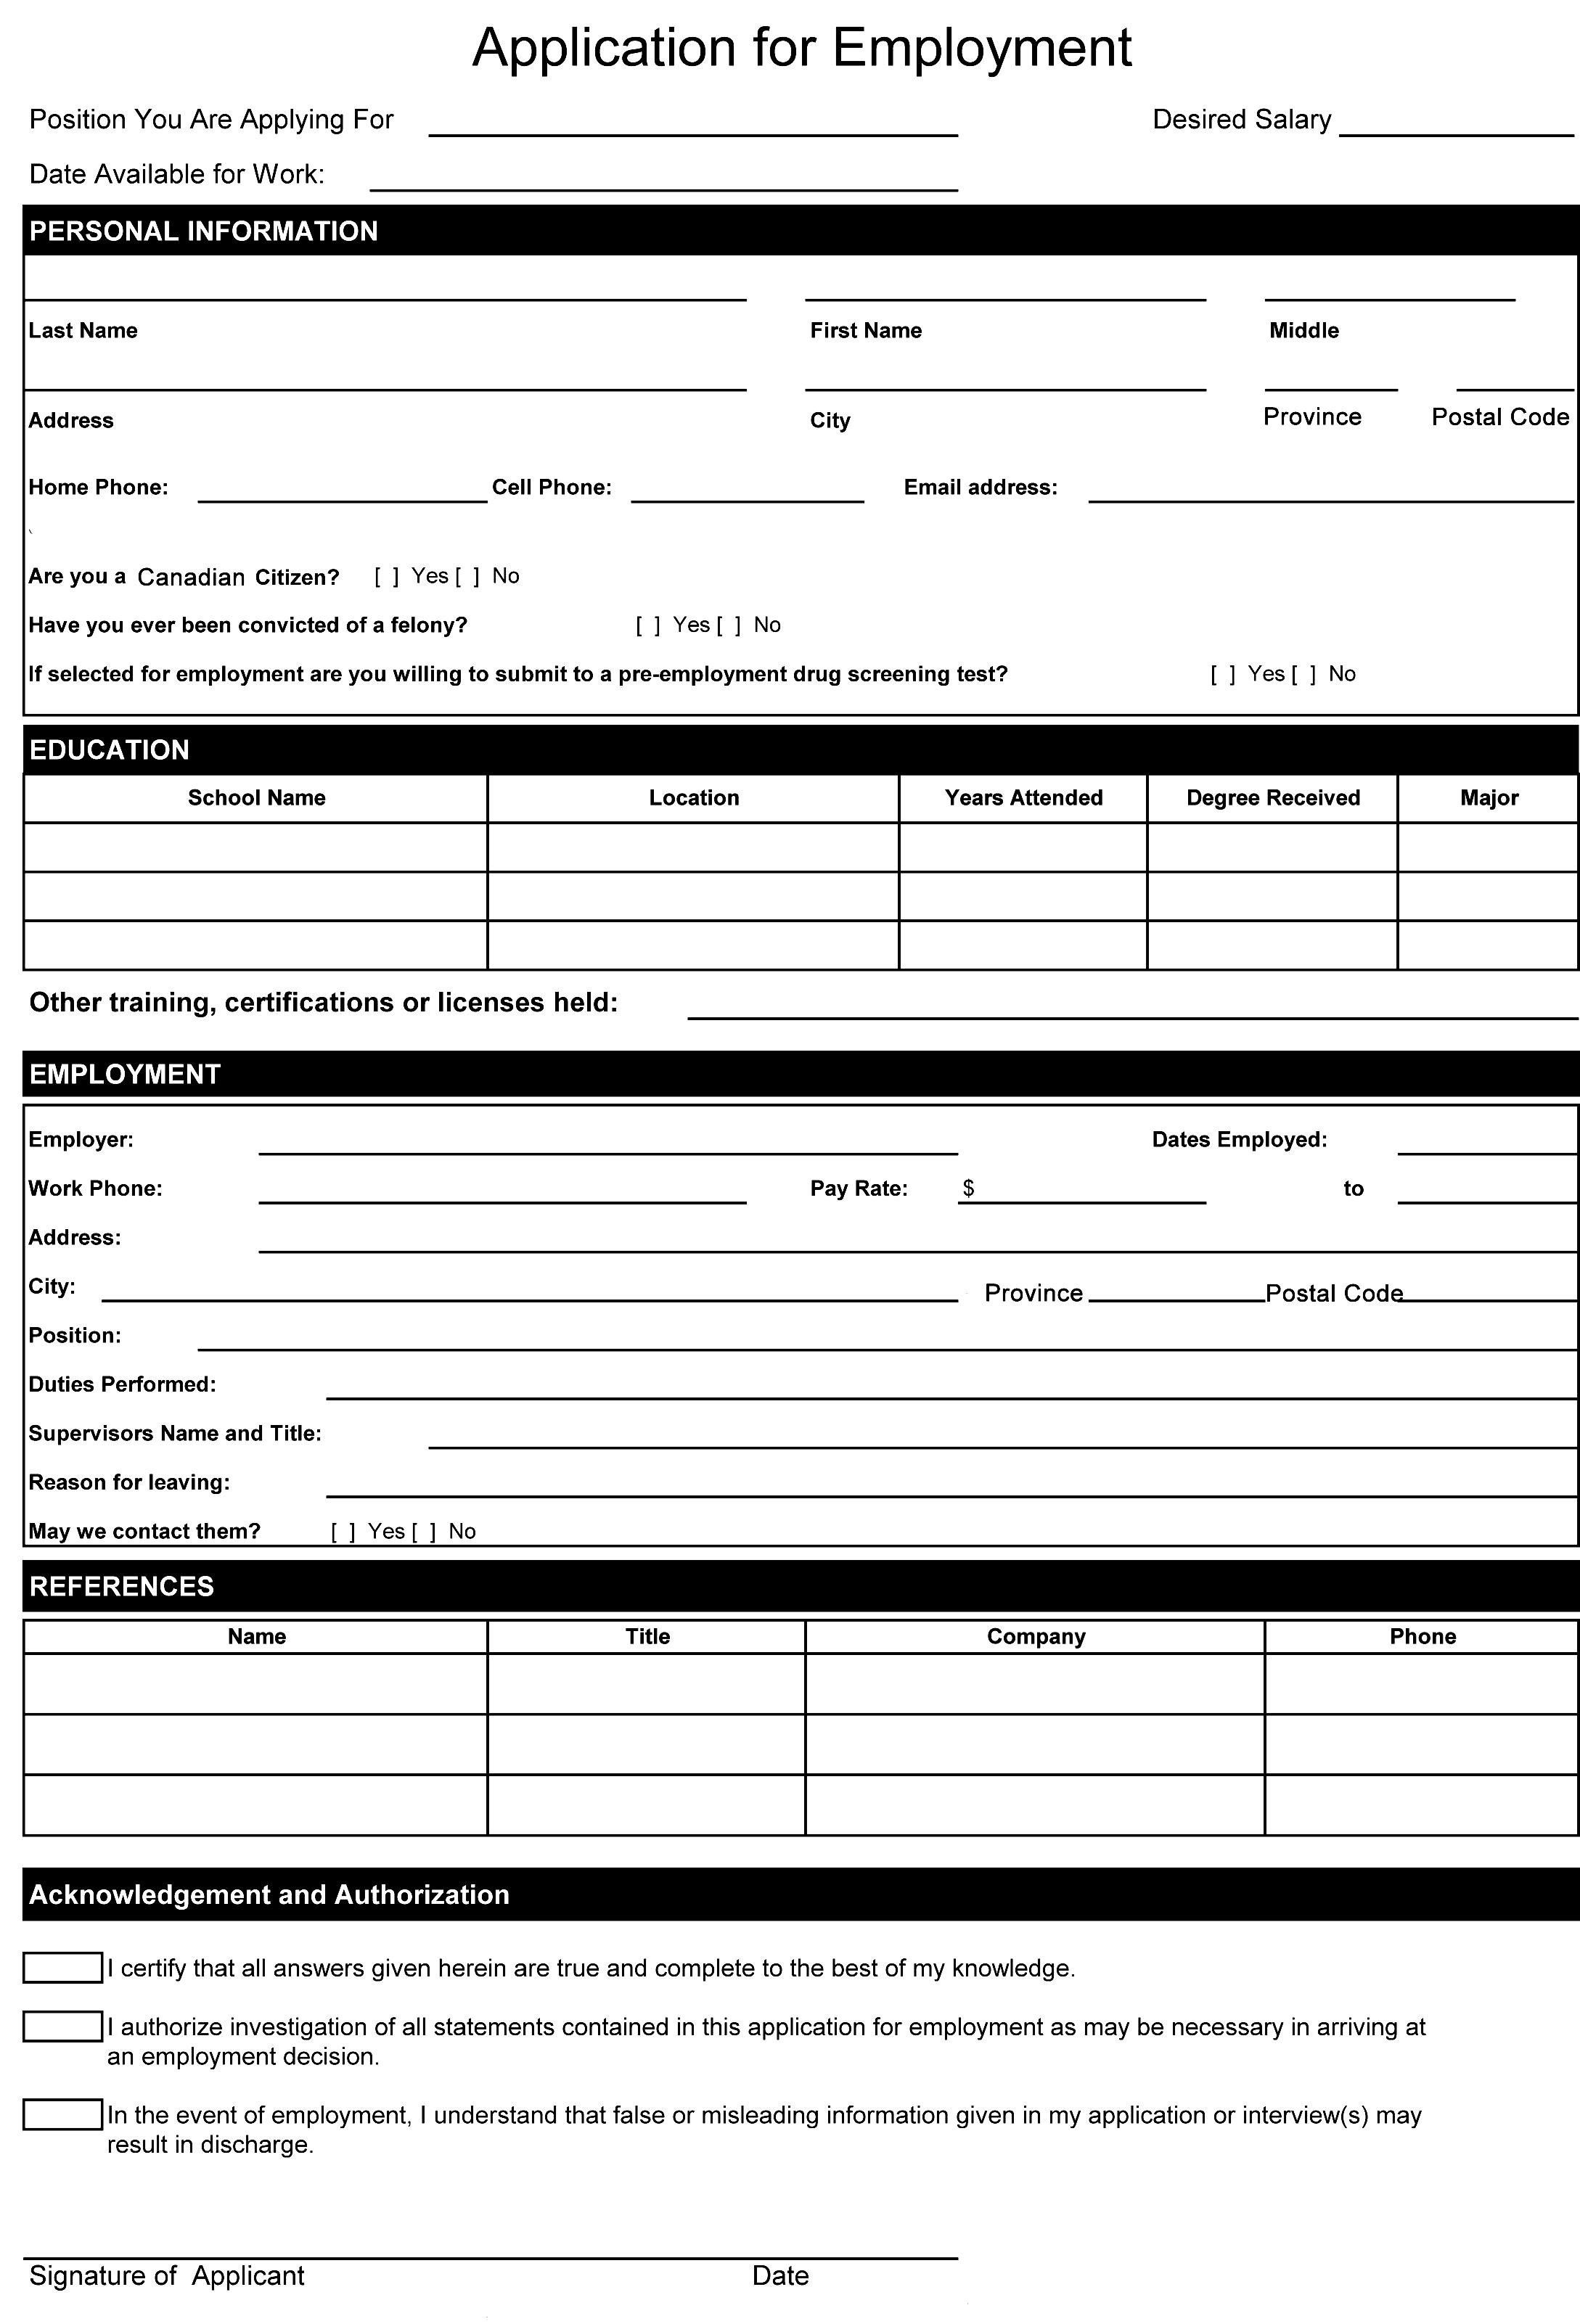 Resume Format Word Document | Resume Format | Job Application Form - Free Printable Job Application Template